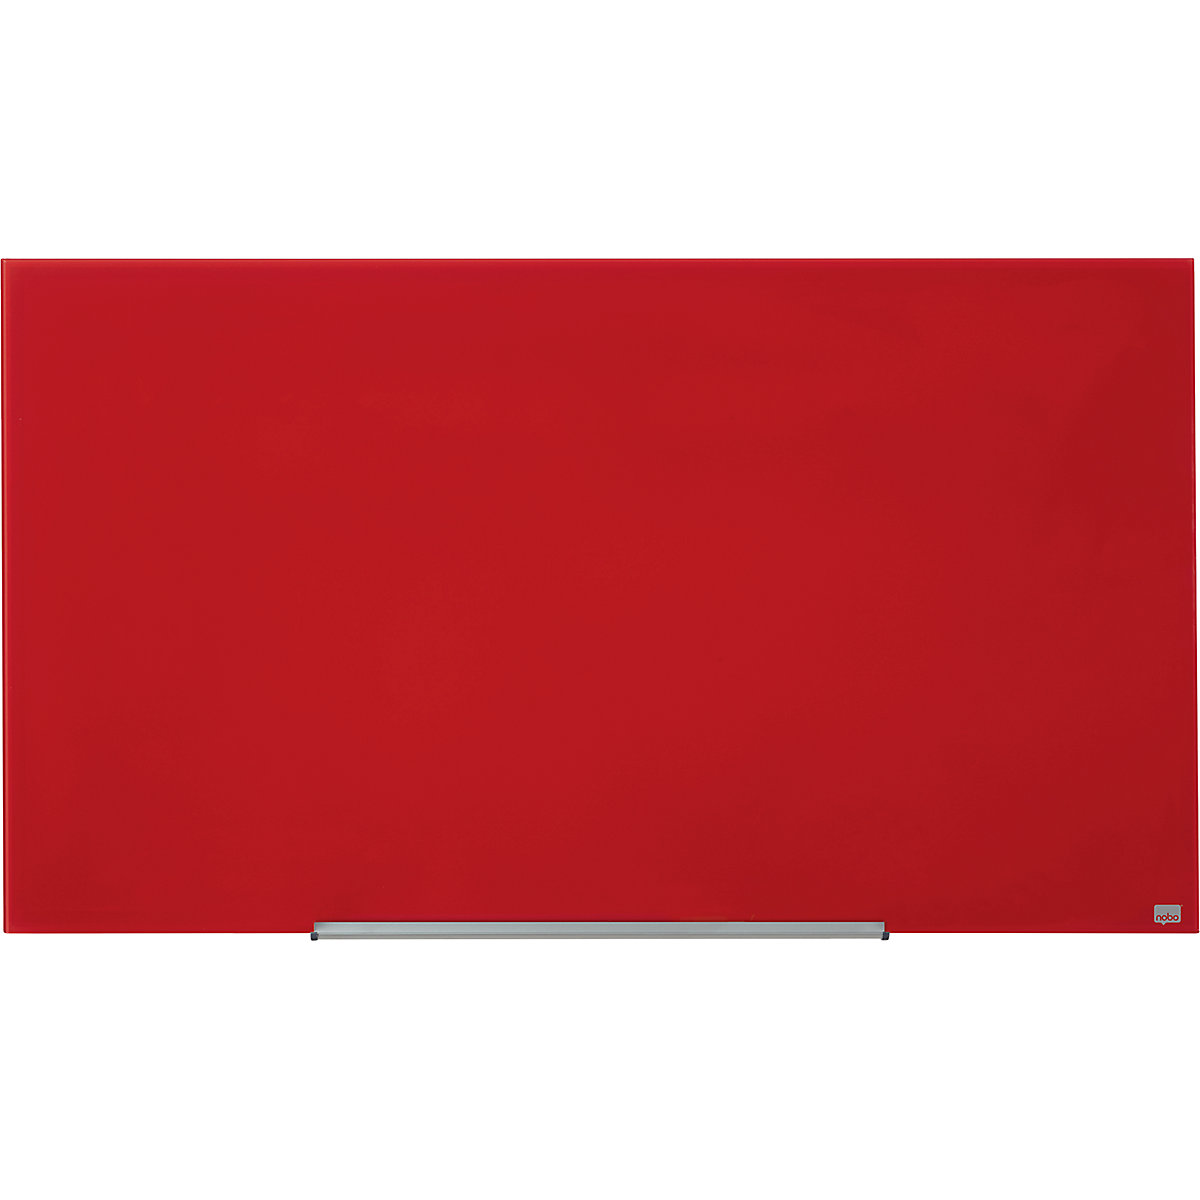 Panel rotulable de cristal WIDESCREEN – nobo, 57'' – A x H 1264 x 711 mm, rojo-6